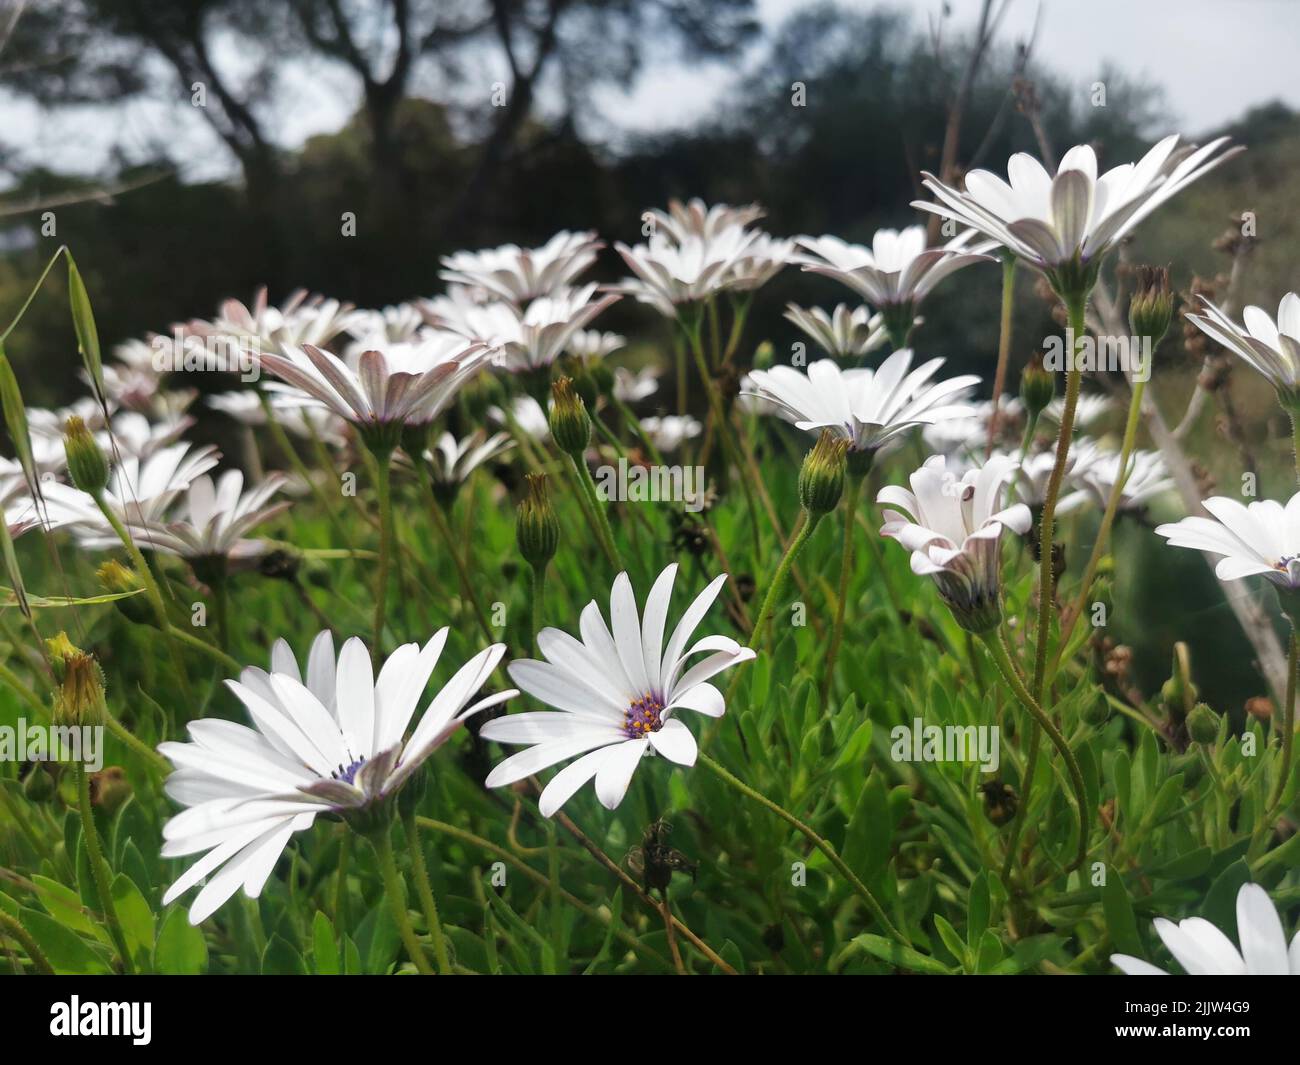 A closeup of Shrubby daisybush (Osteospermum fruticosum) flowers growing in a garden Stock Photo